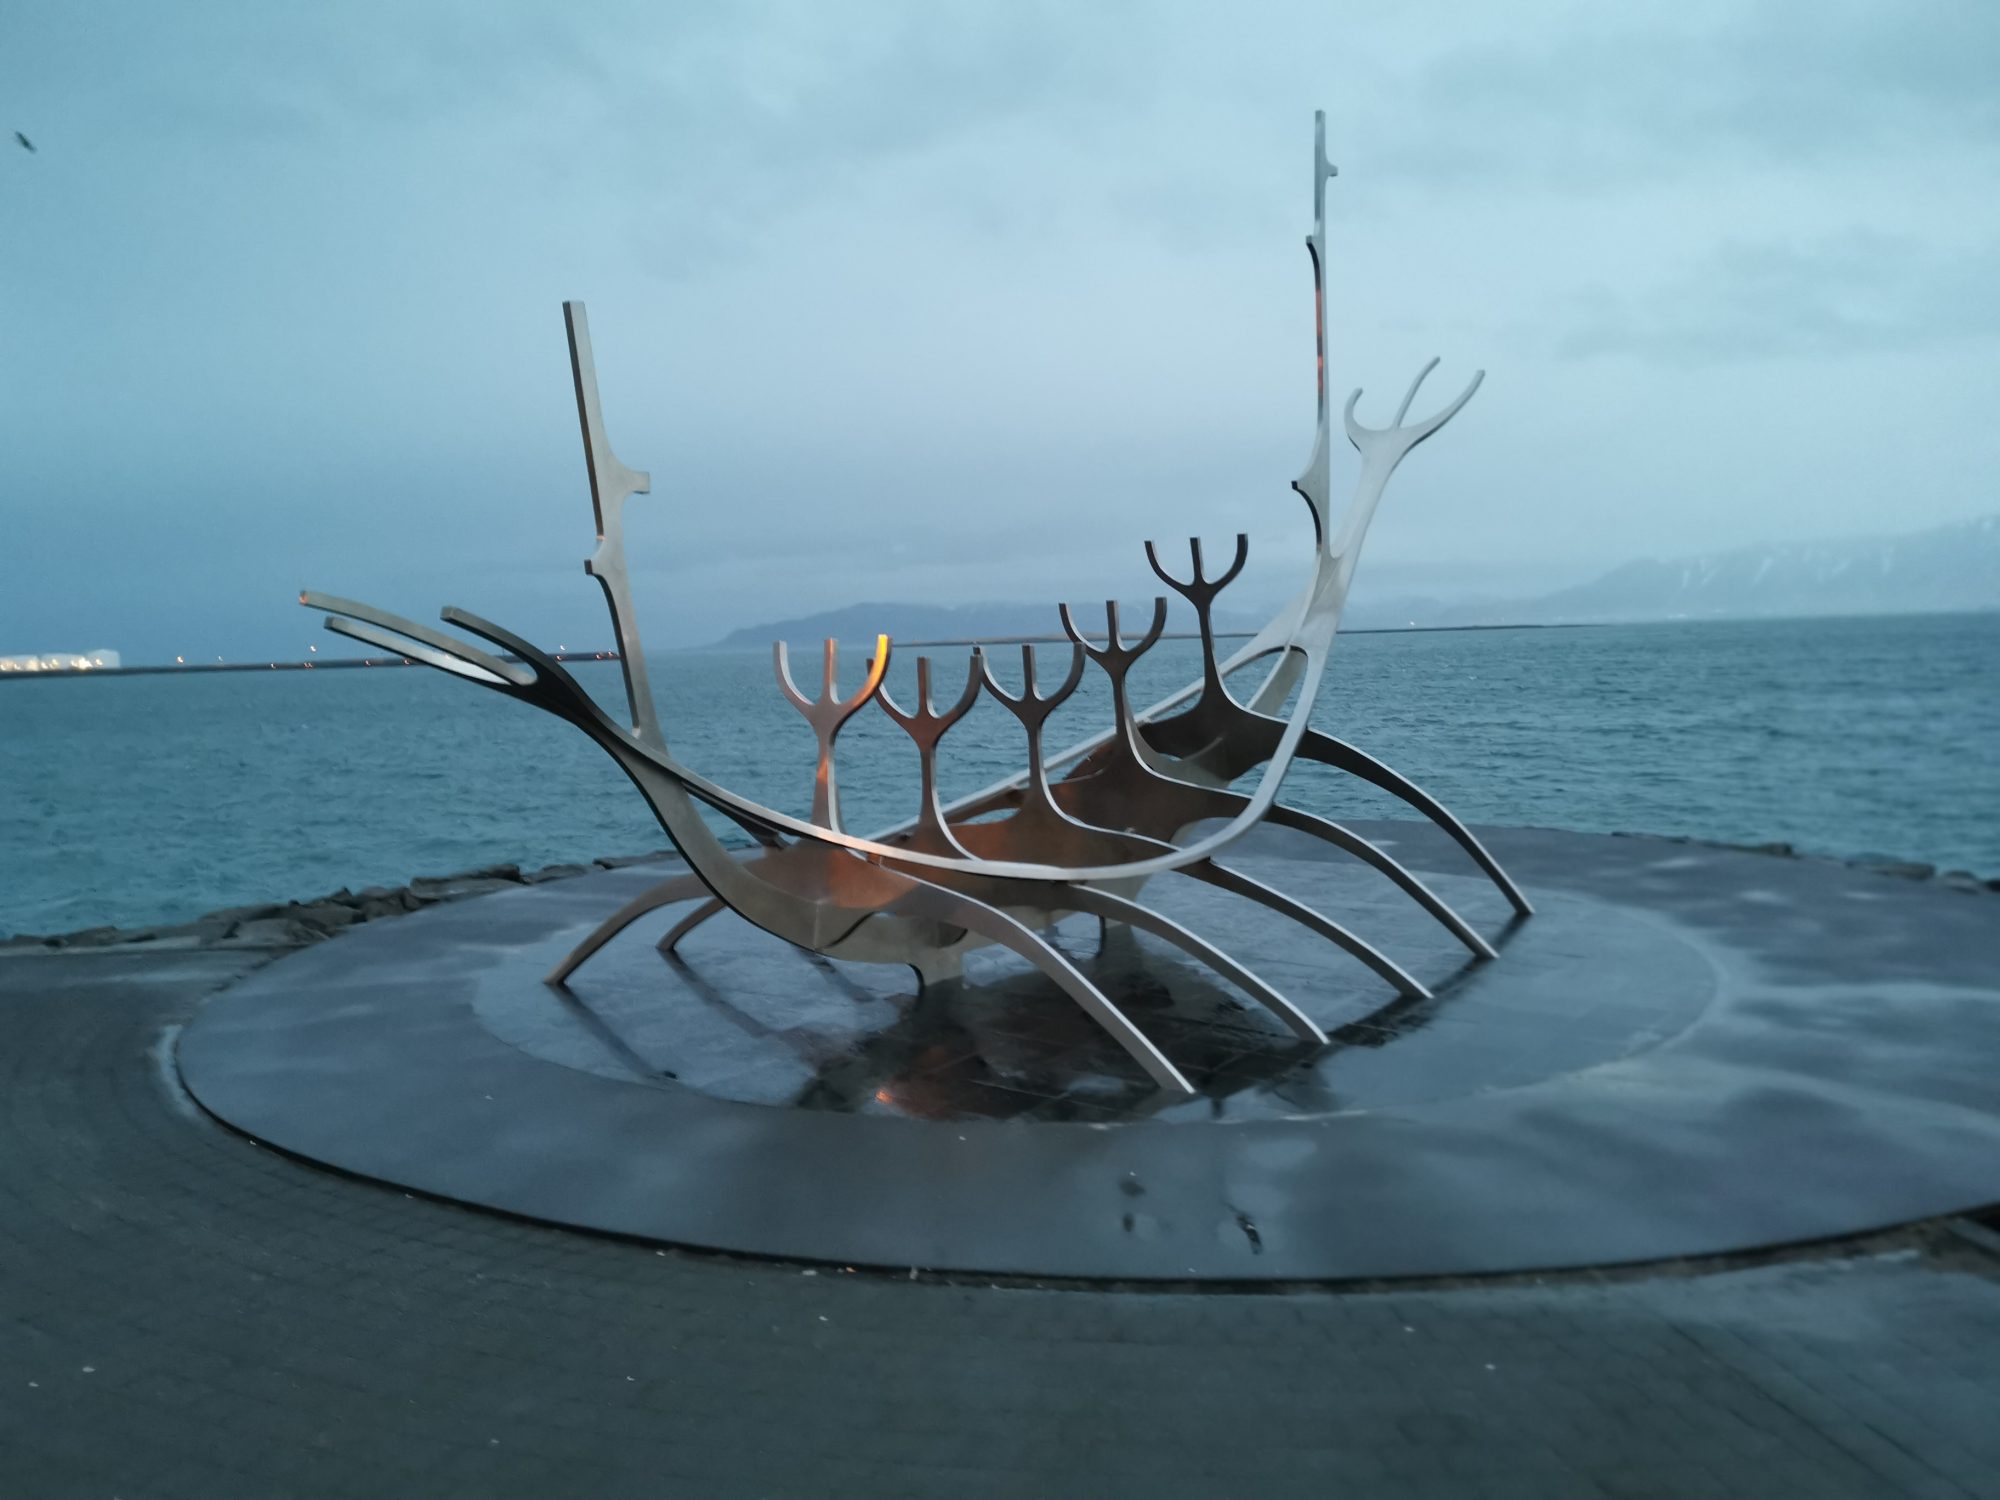 Sightseeing i Reykjavik